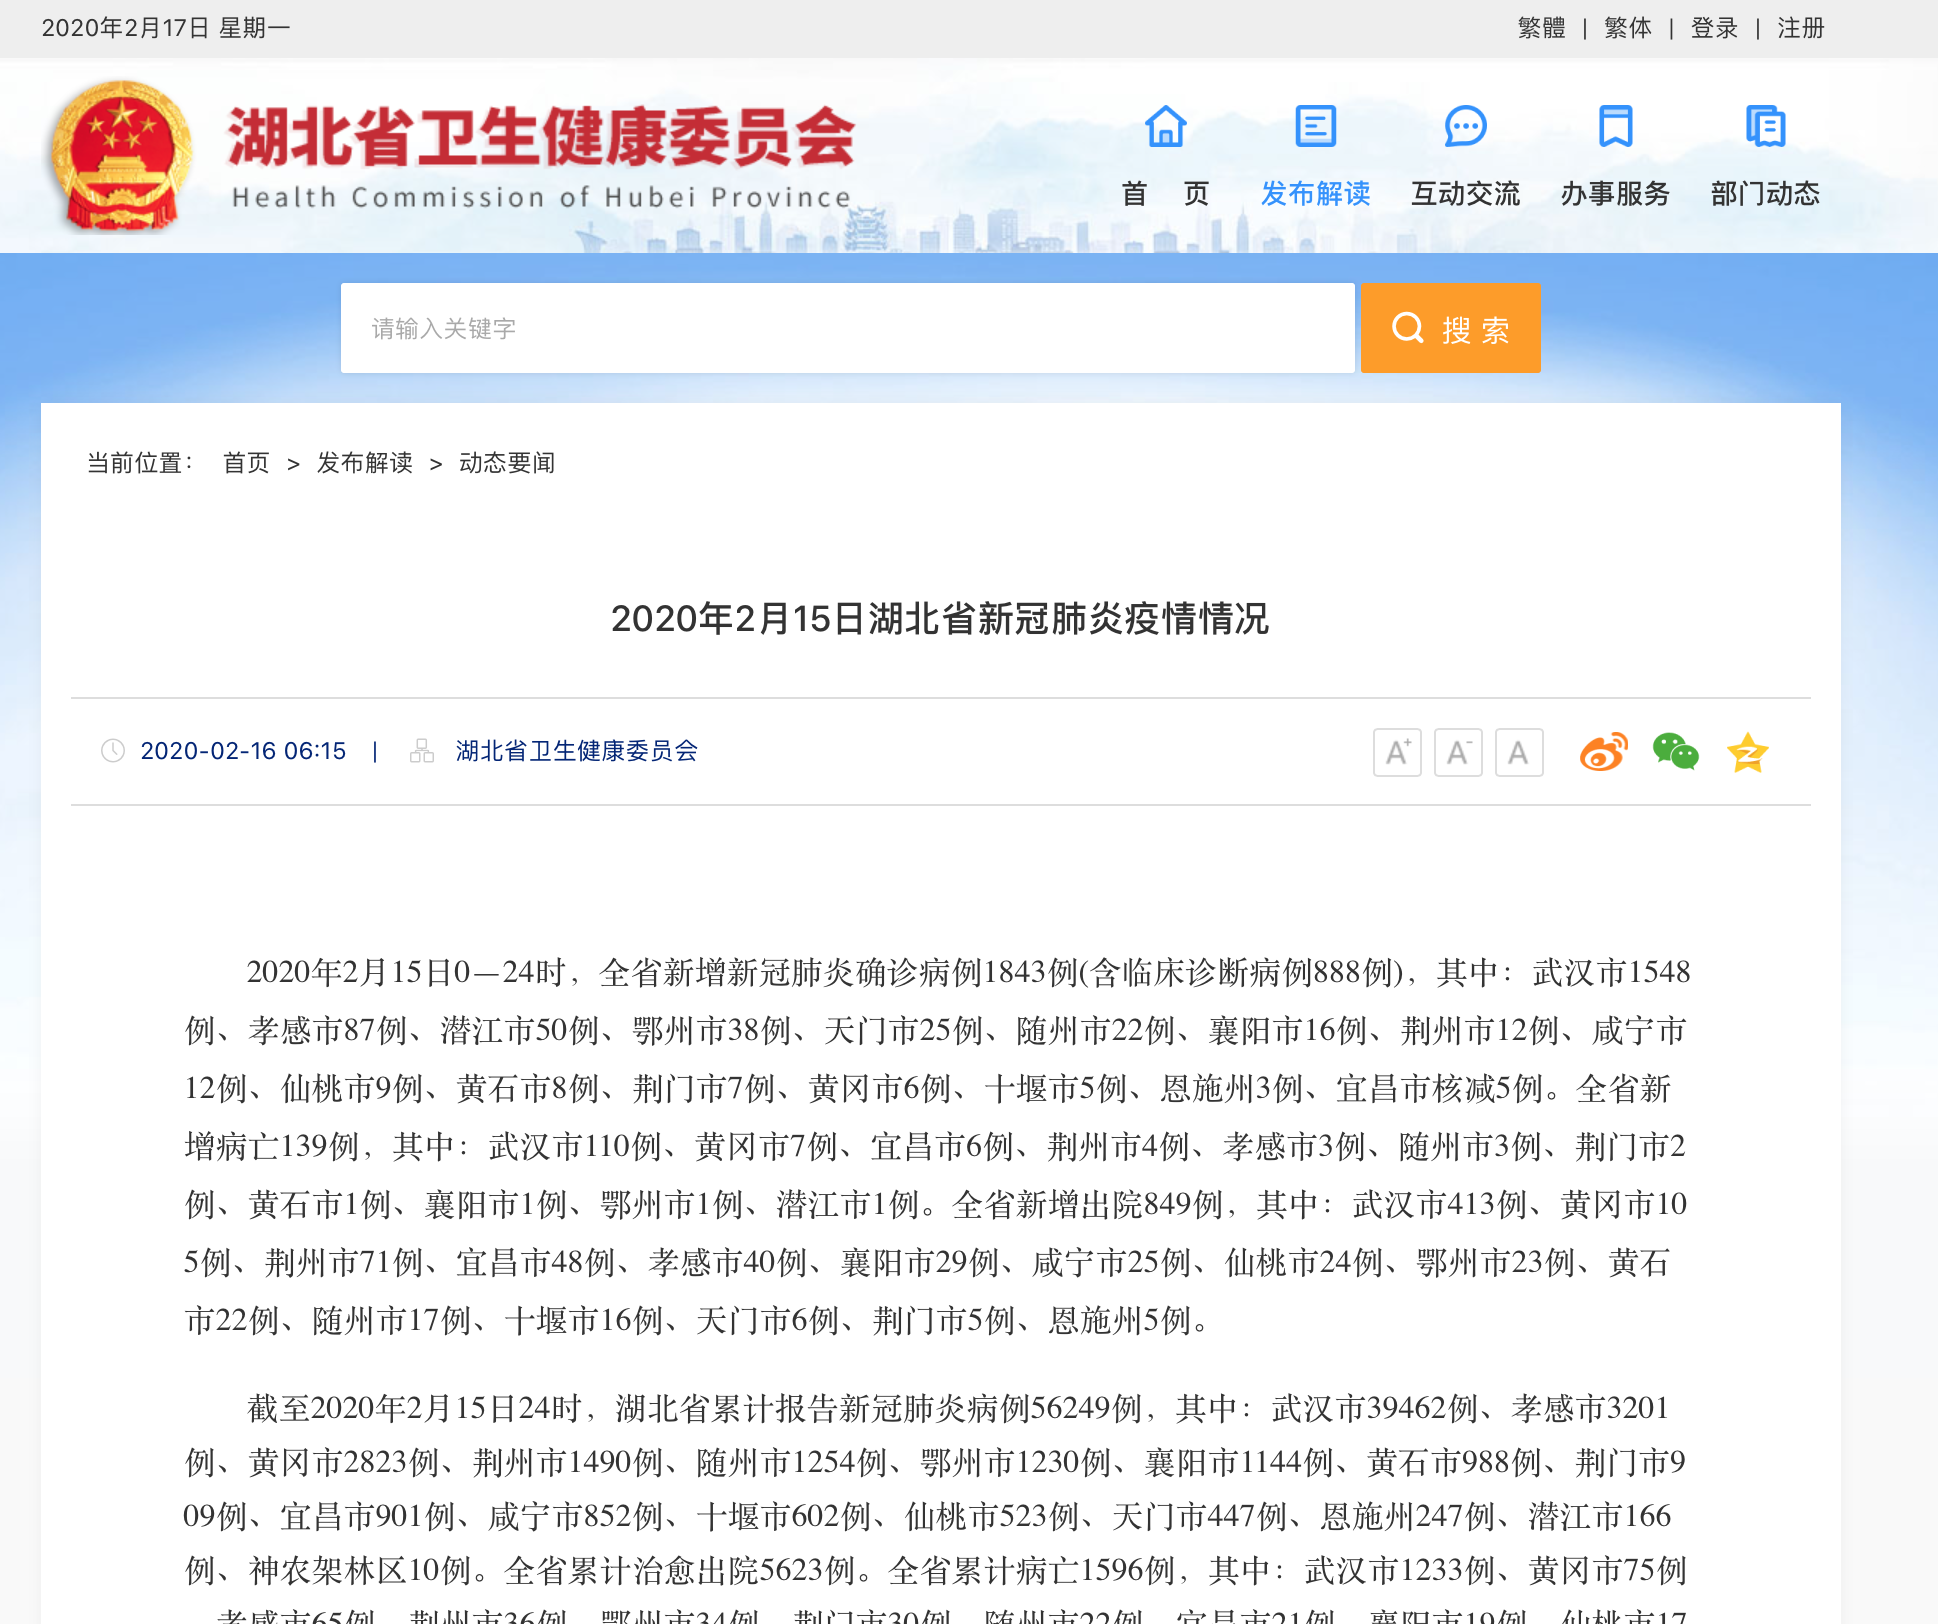 [Figure from Health Commission of Hubei](http://www.hubei.gov.cn/zhuanti/2020/gzxxgzbd/zxtb/)